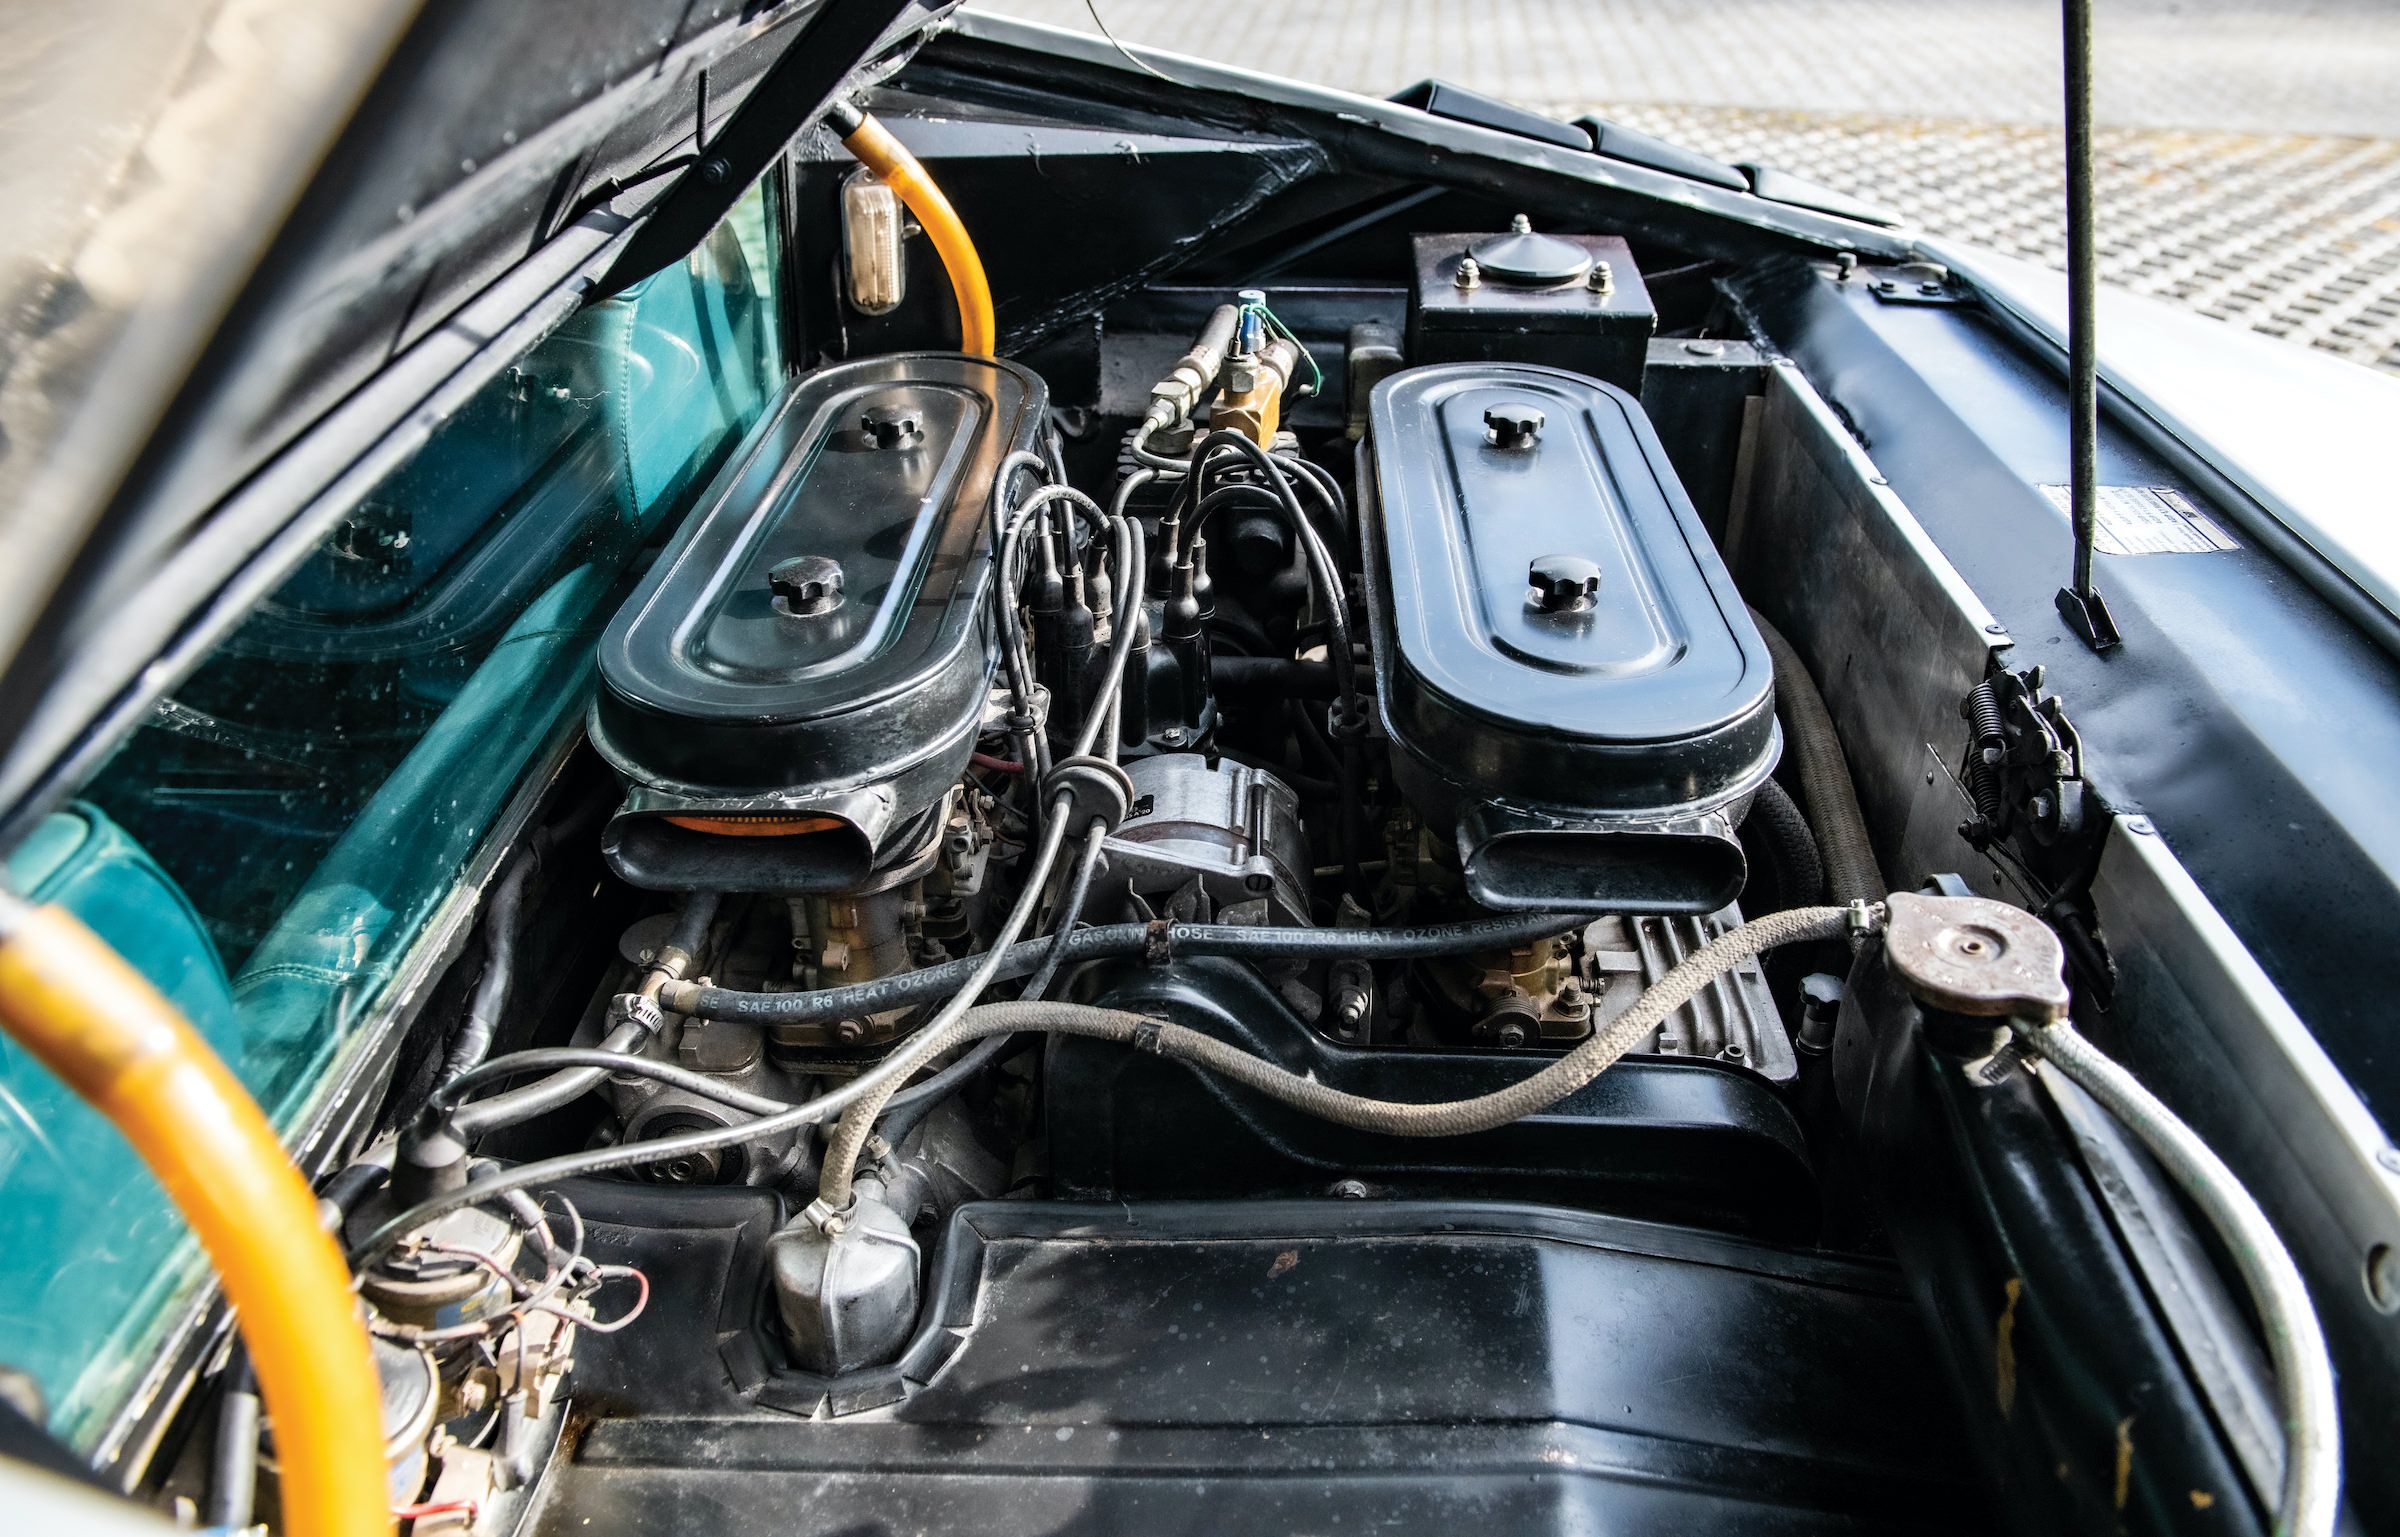 An Image Of The 1970 Lamborghini Urraco's Powerful Engine